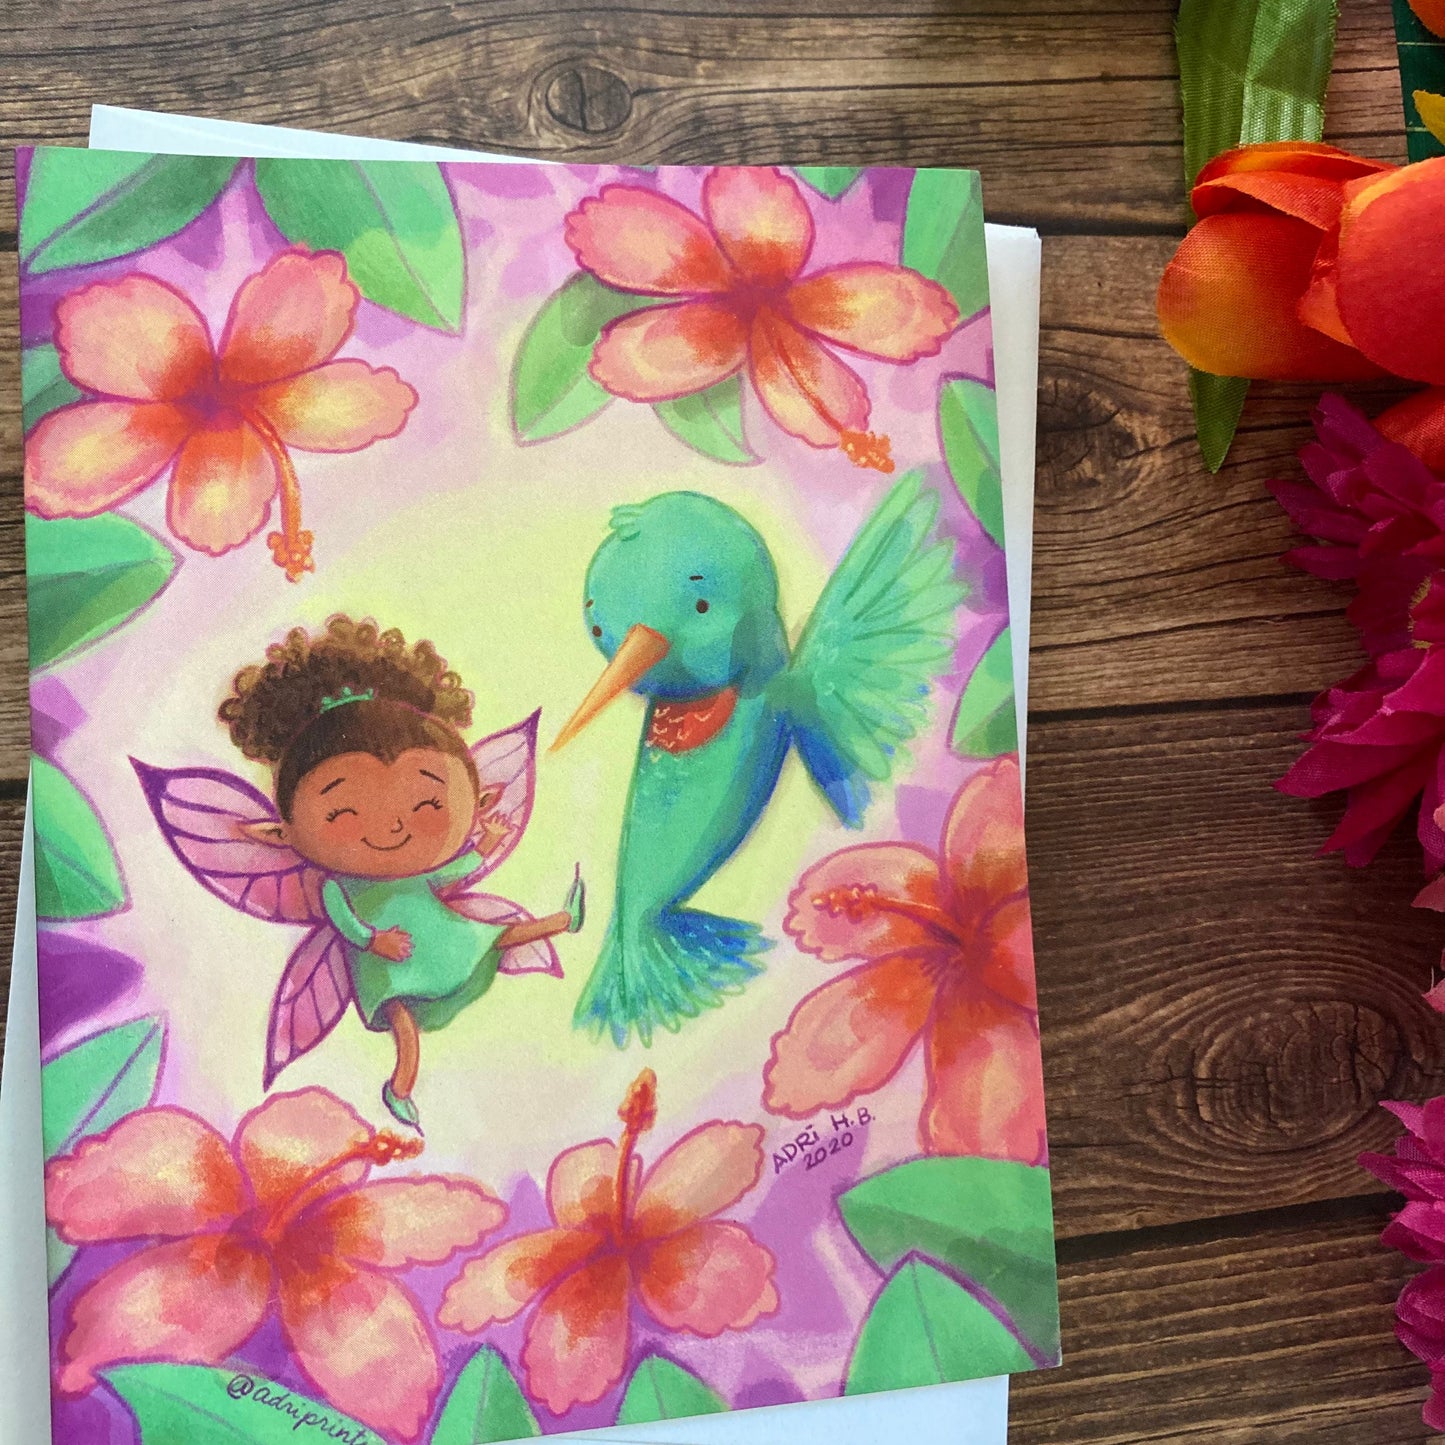 EVERYDAY - Hummingbird Flower Fairy - Greeting Card for Friends, Family, art by Adriana Bergstrom (Adriprints)